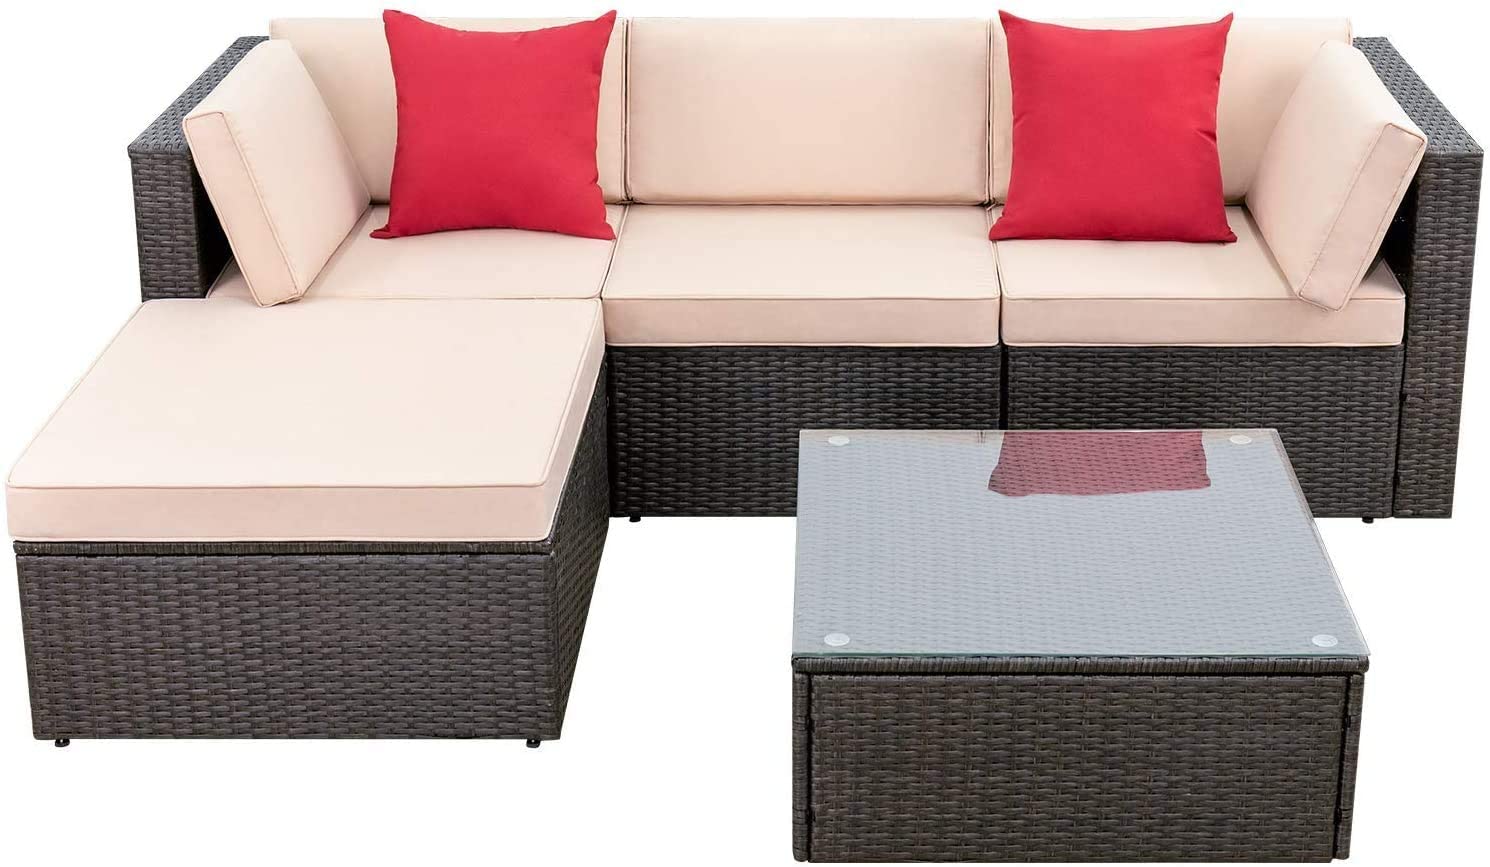 Devoko Couch Set Outdoor Furniture, 5-Piece